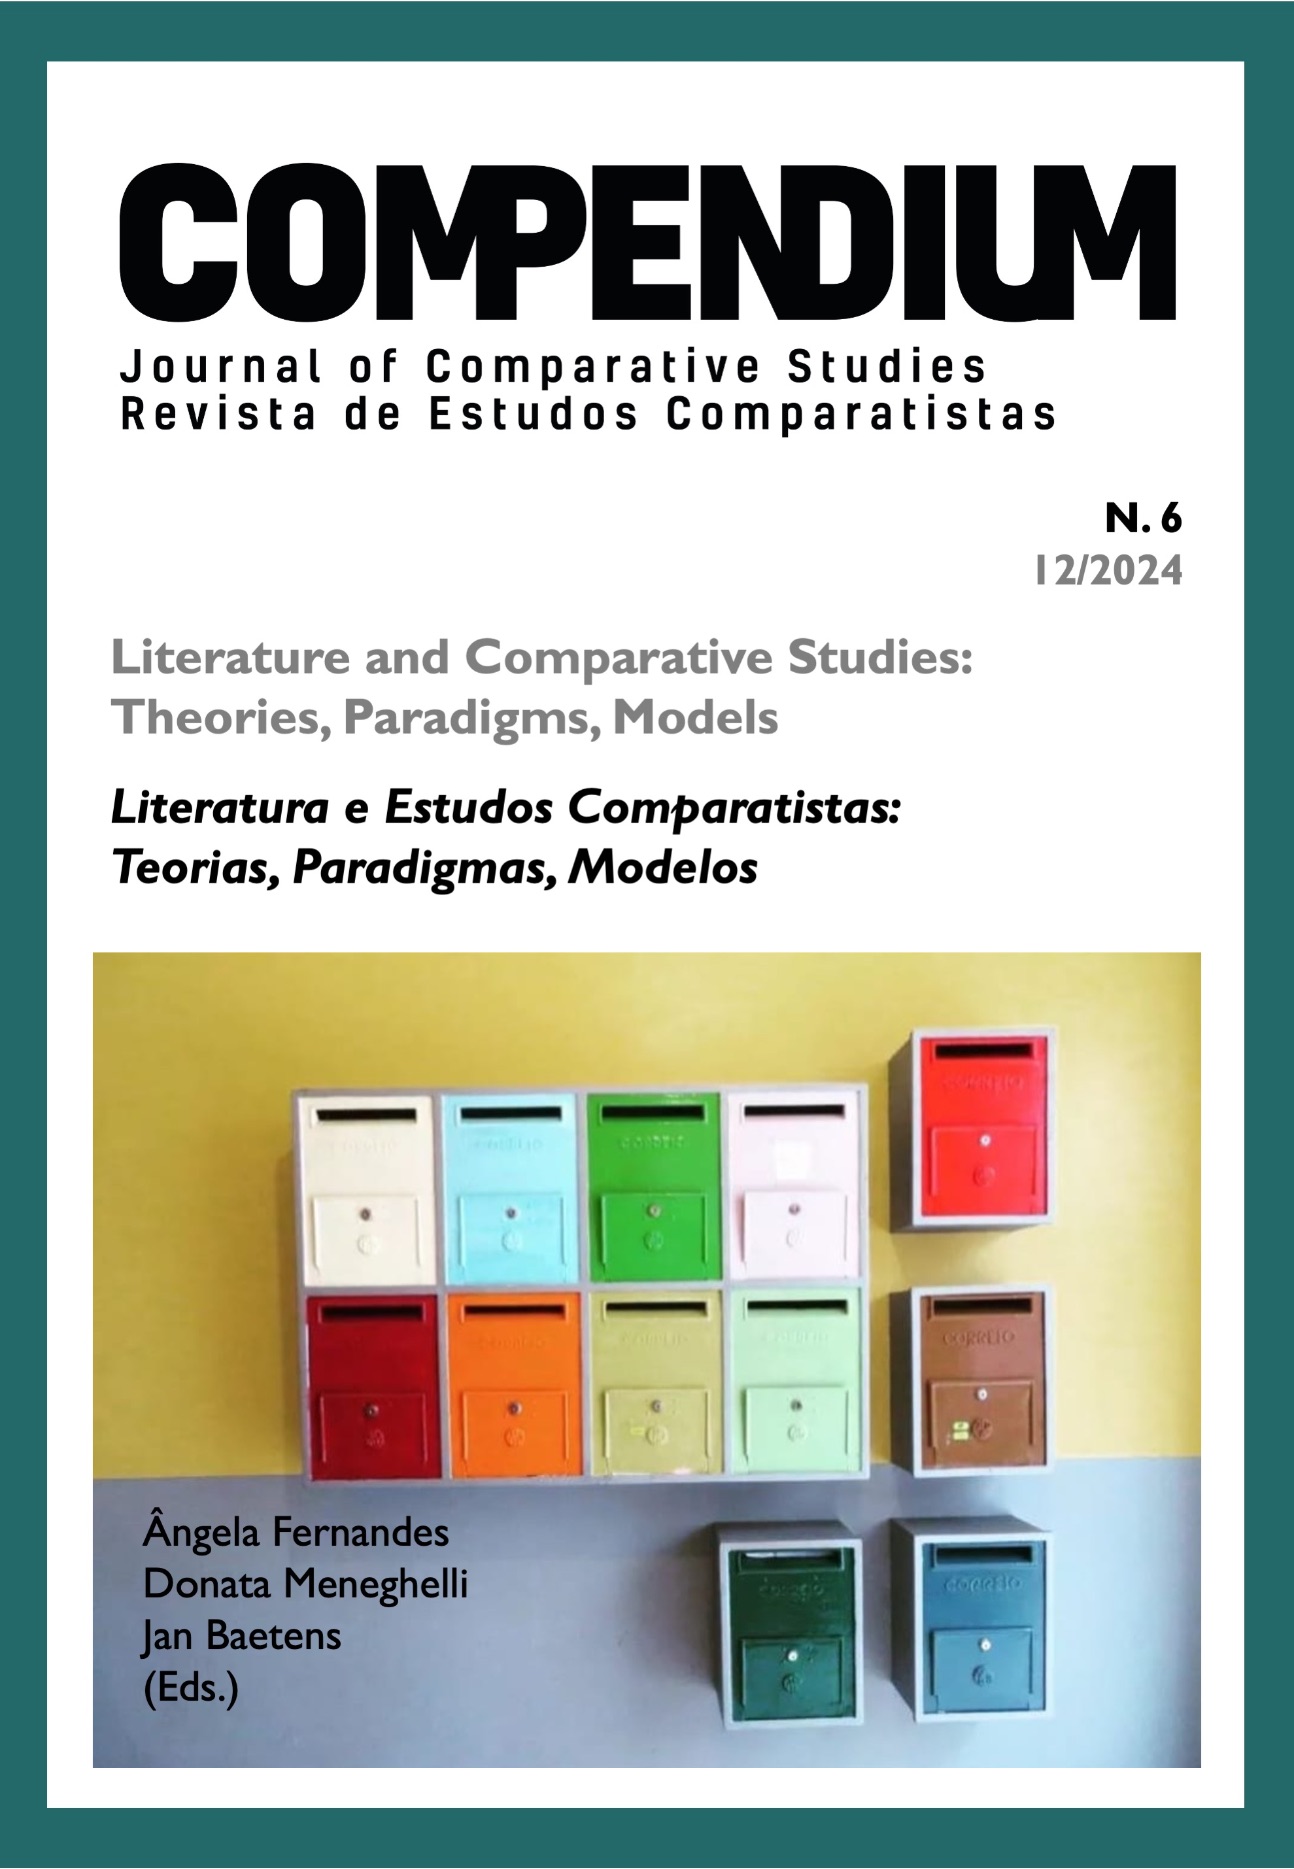  Literature and Comparative Studies : Theories, Paradigms, Models (Compendium n° 6)